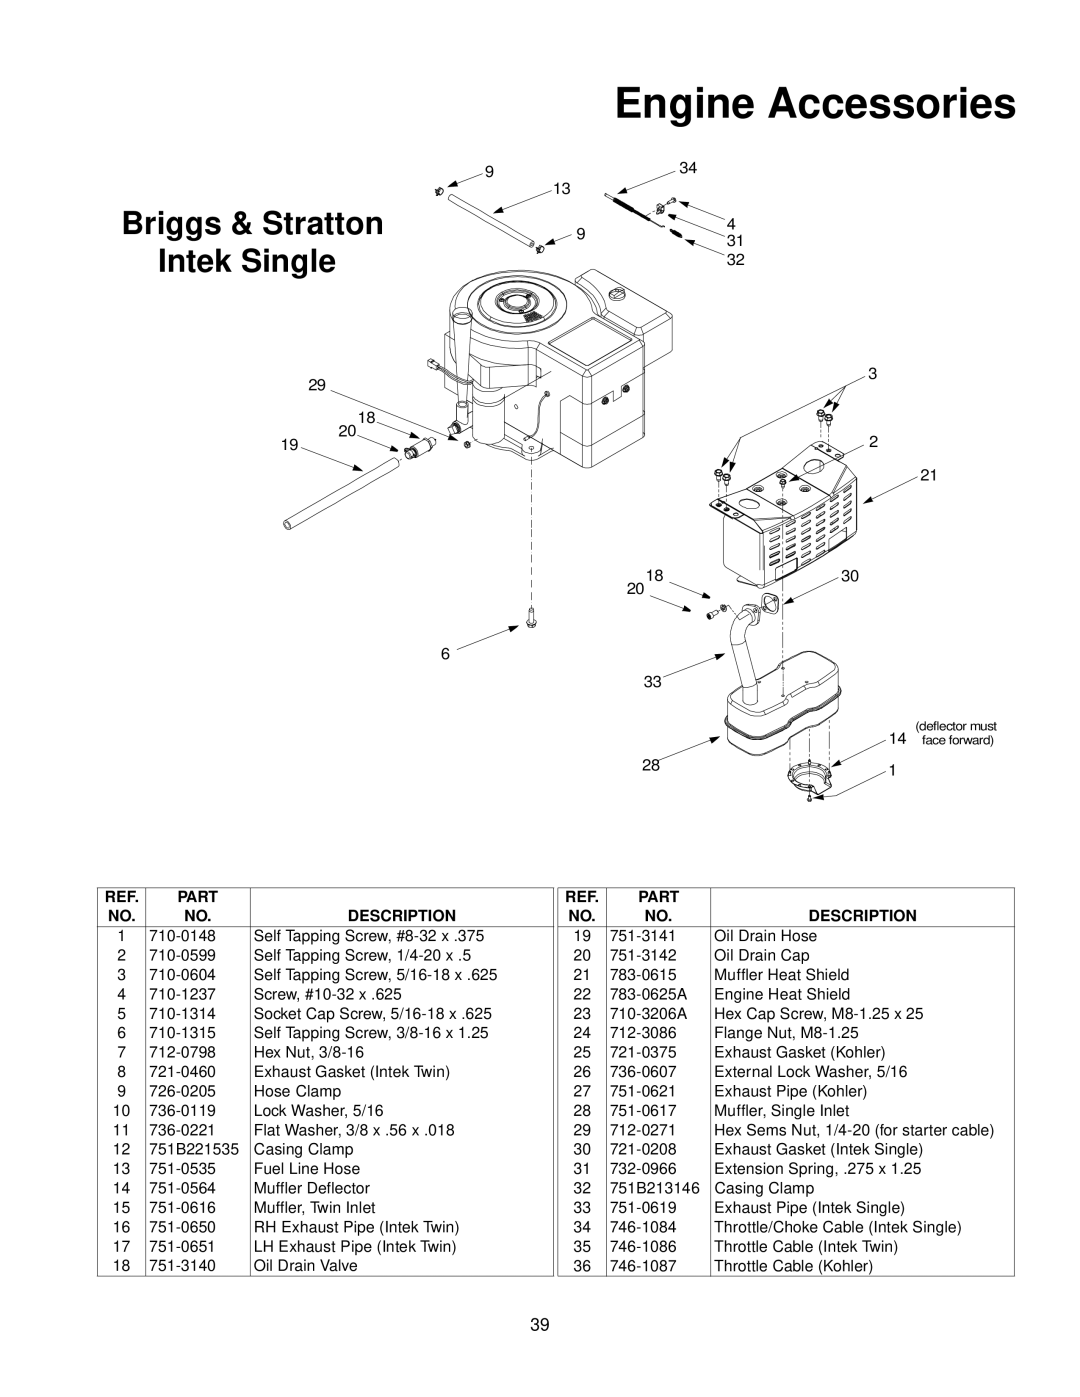 Troy-Bilt 604 manual Engine Accessories, Briggs & Stratton, Intek Single 